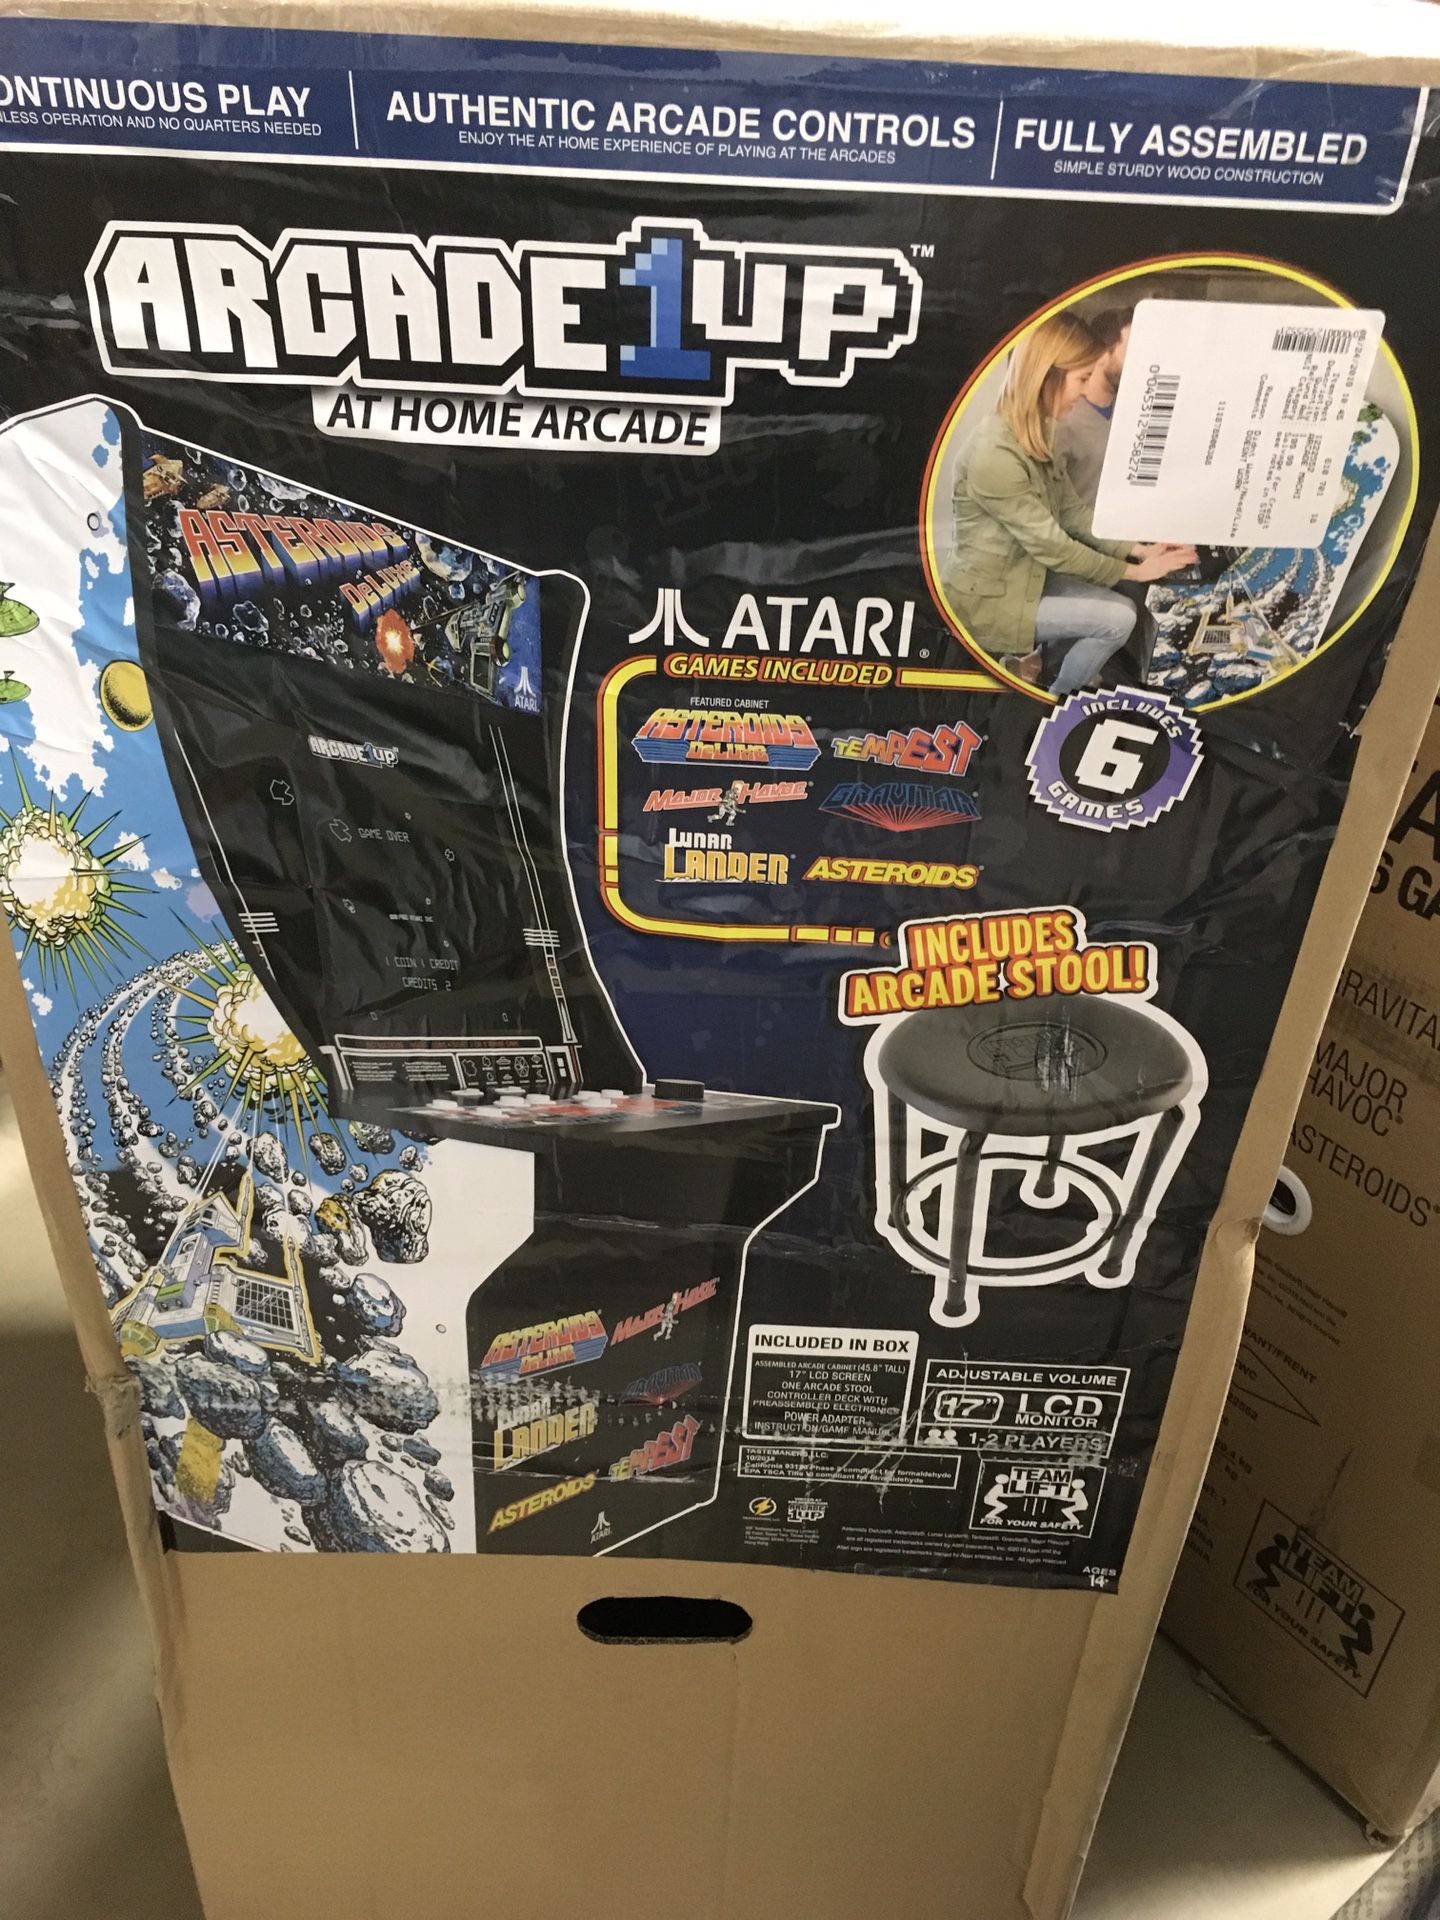 Arcade one up